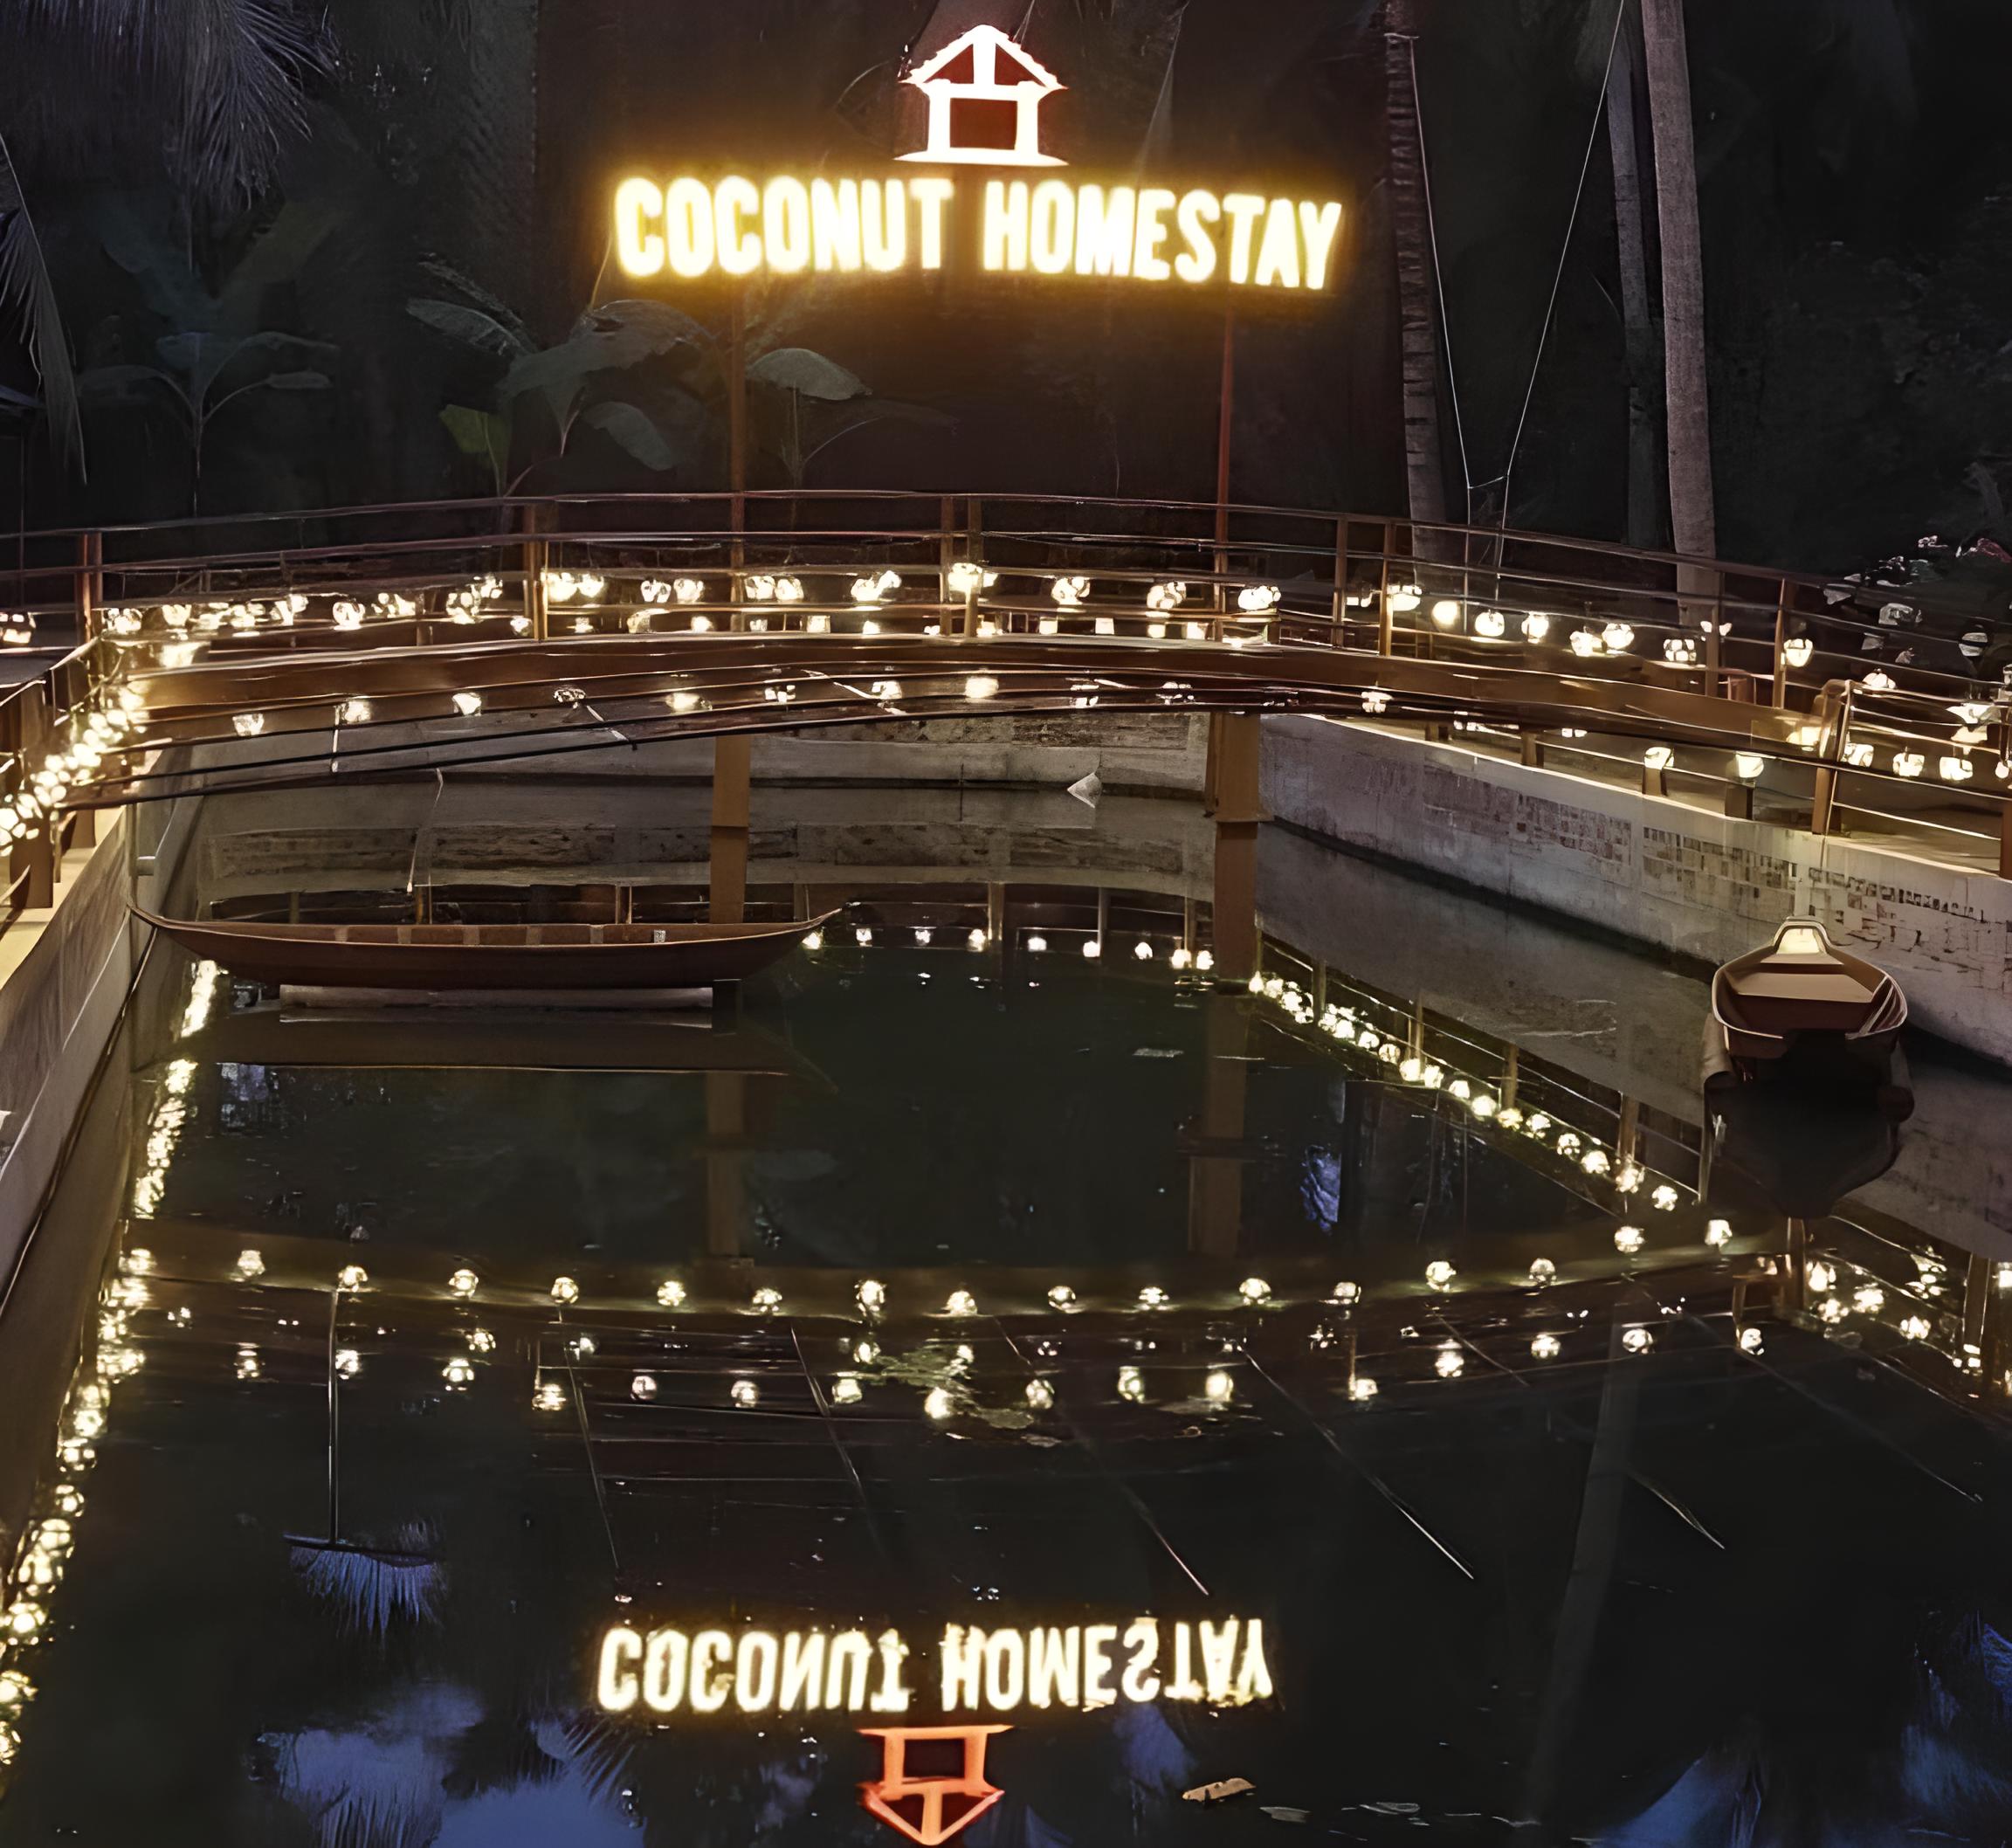 Coconut Homestay 